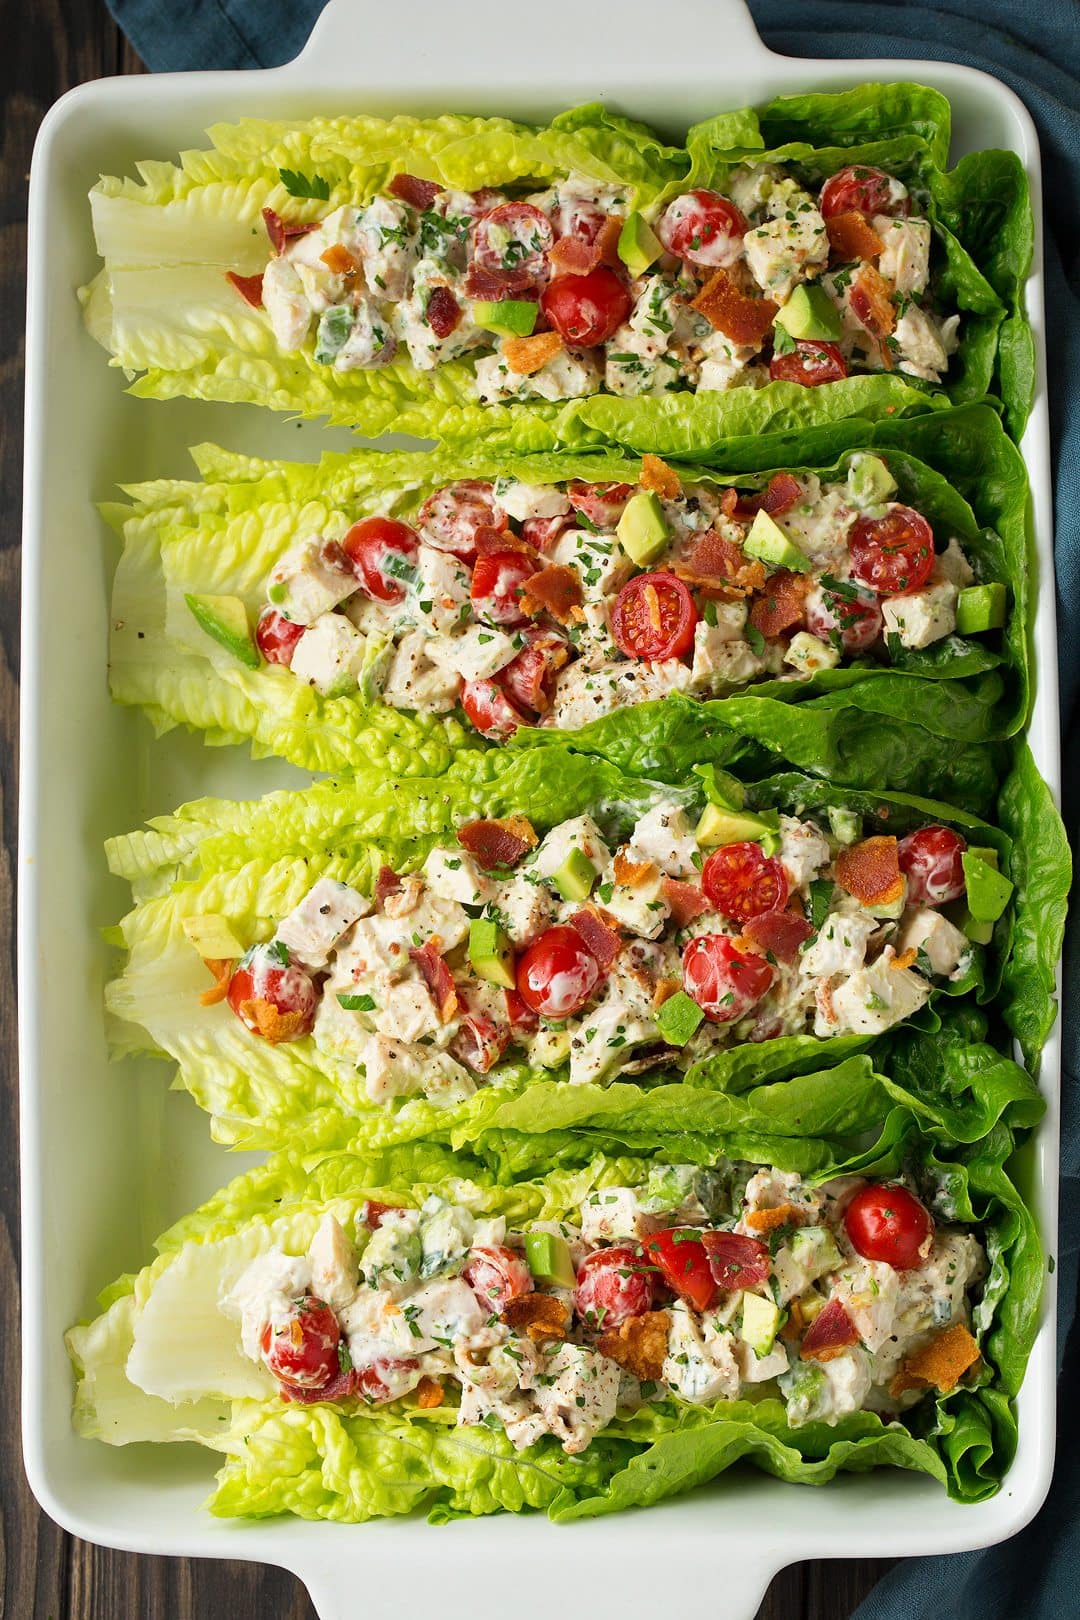 BLTA Chicken Salad Lettuce Wraps 